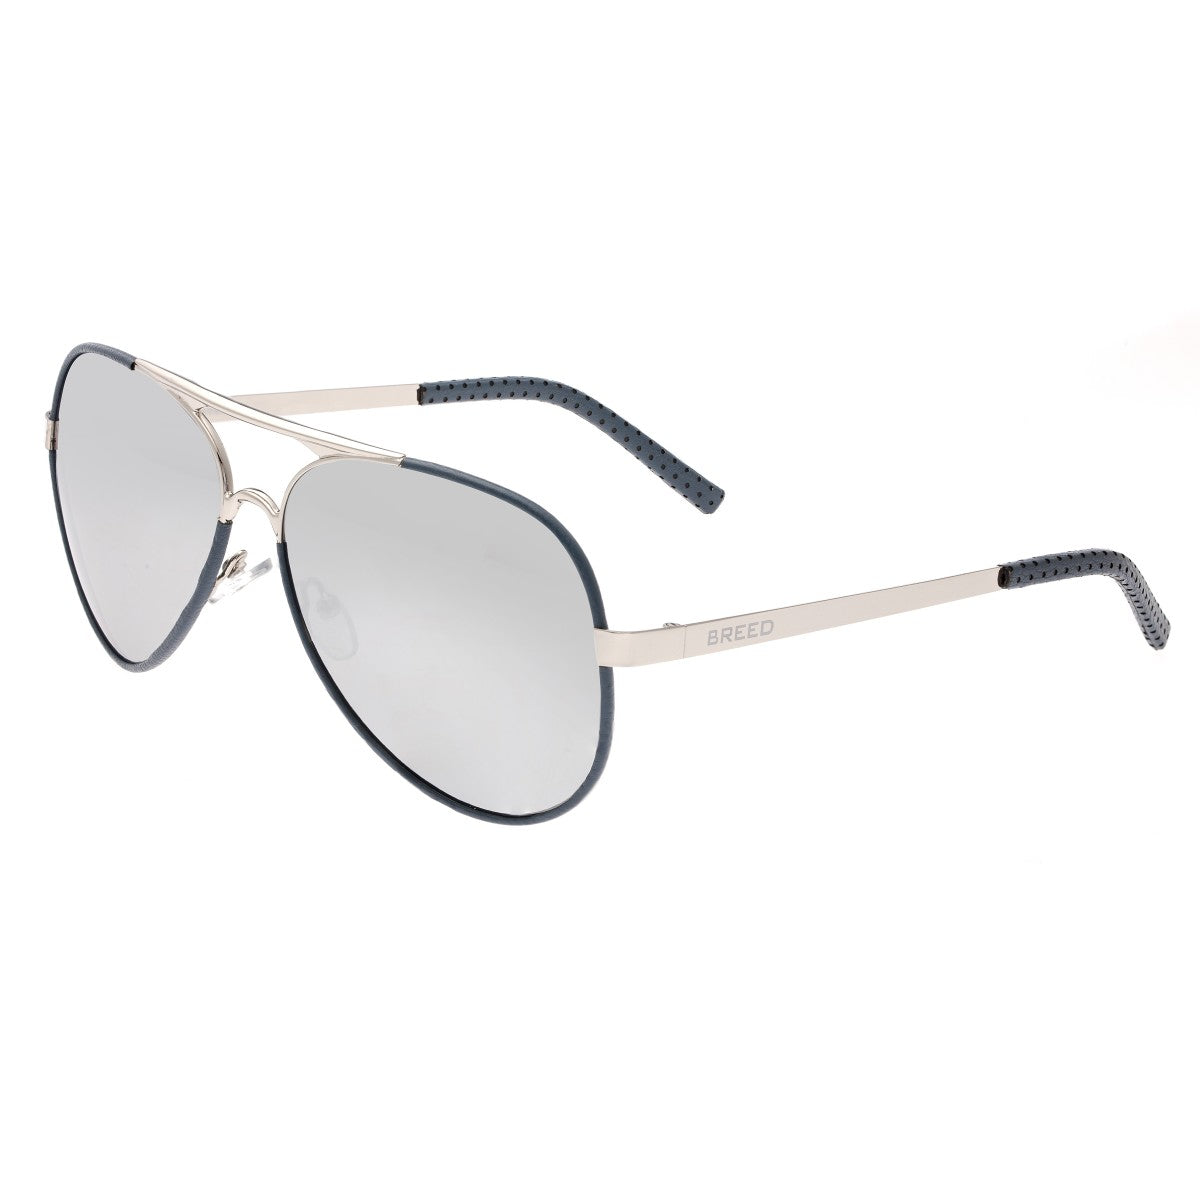 Breed Genesis Polarized Sunglasses - Silver/Silver - BSG046SL